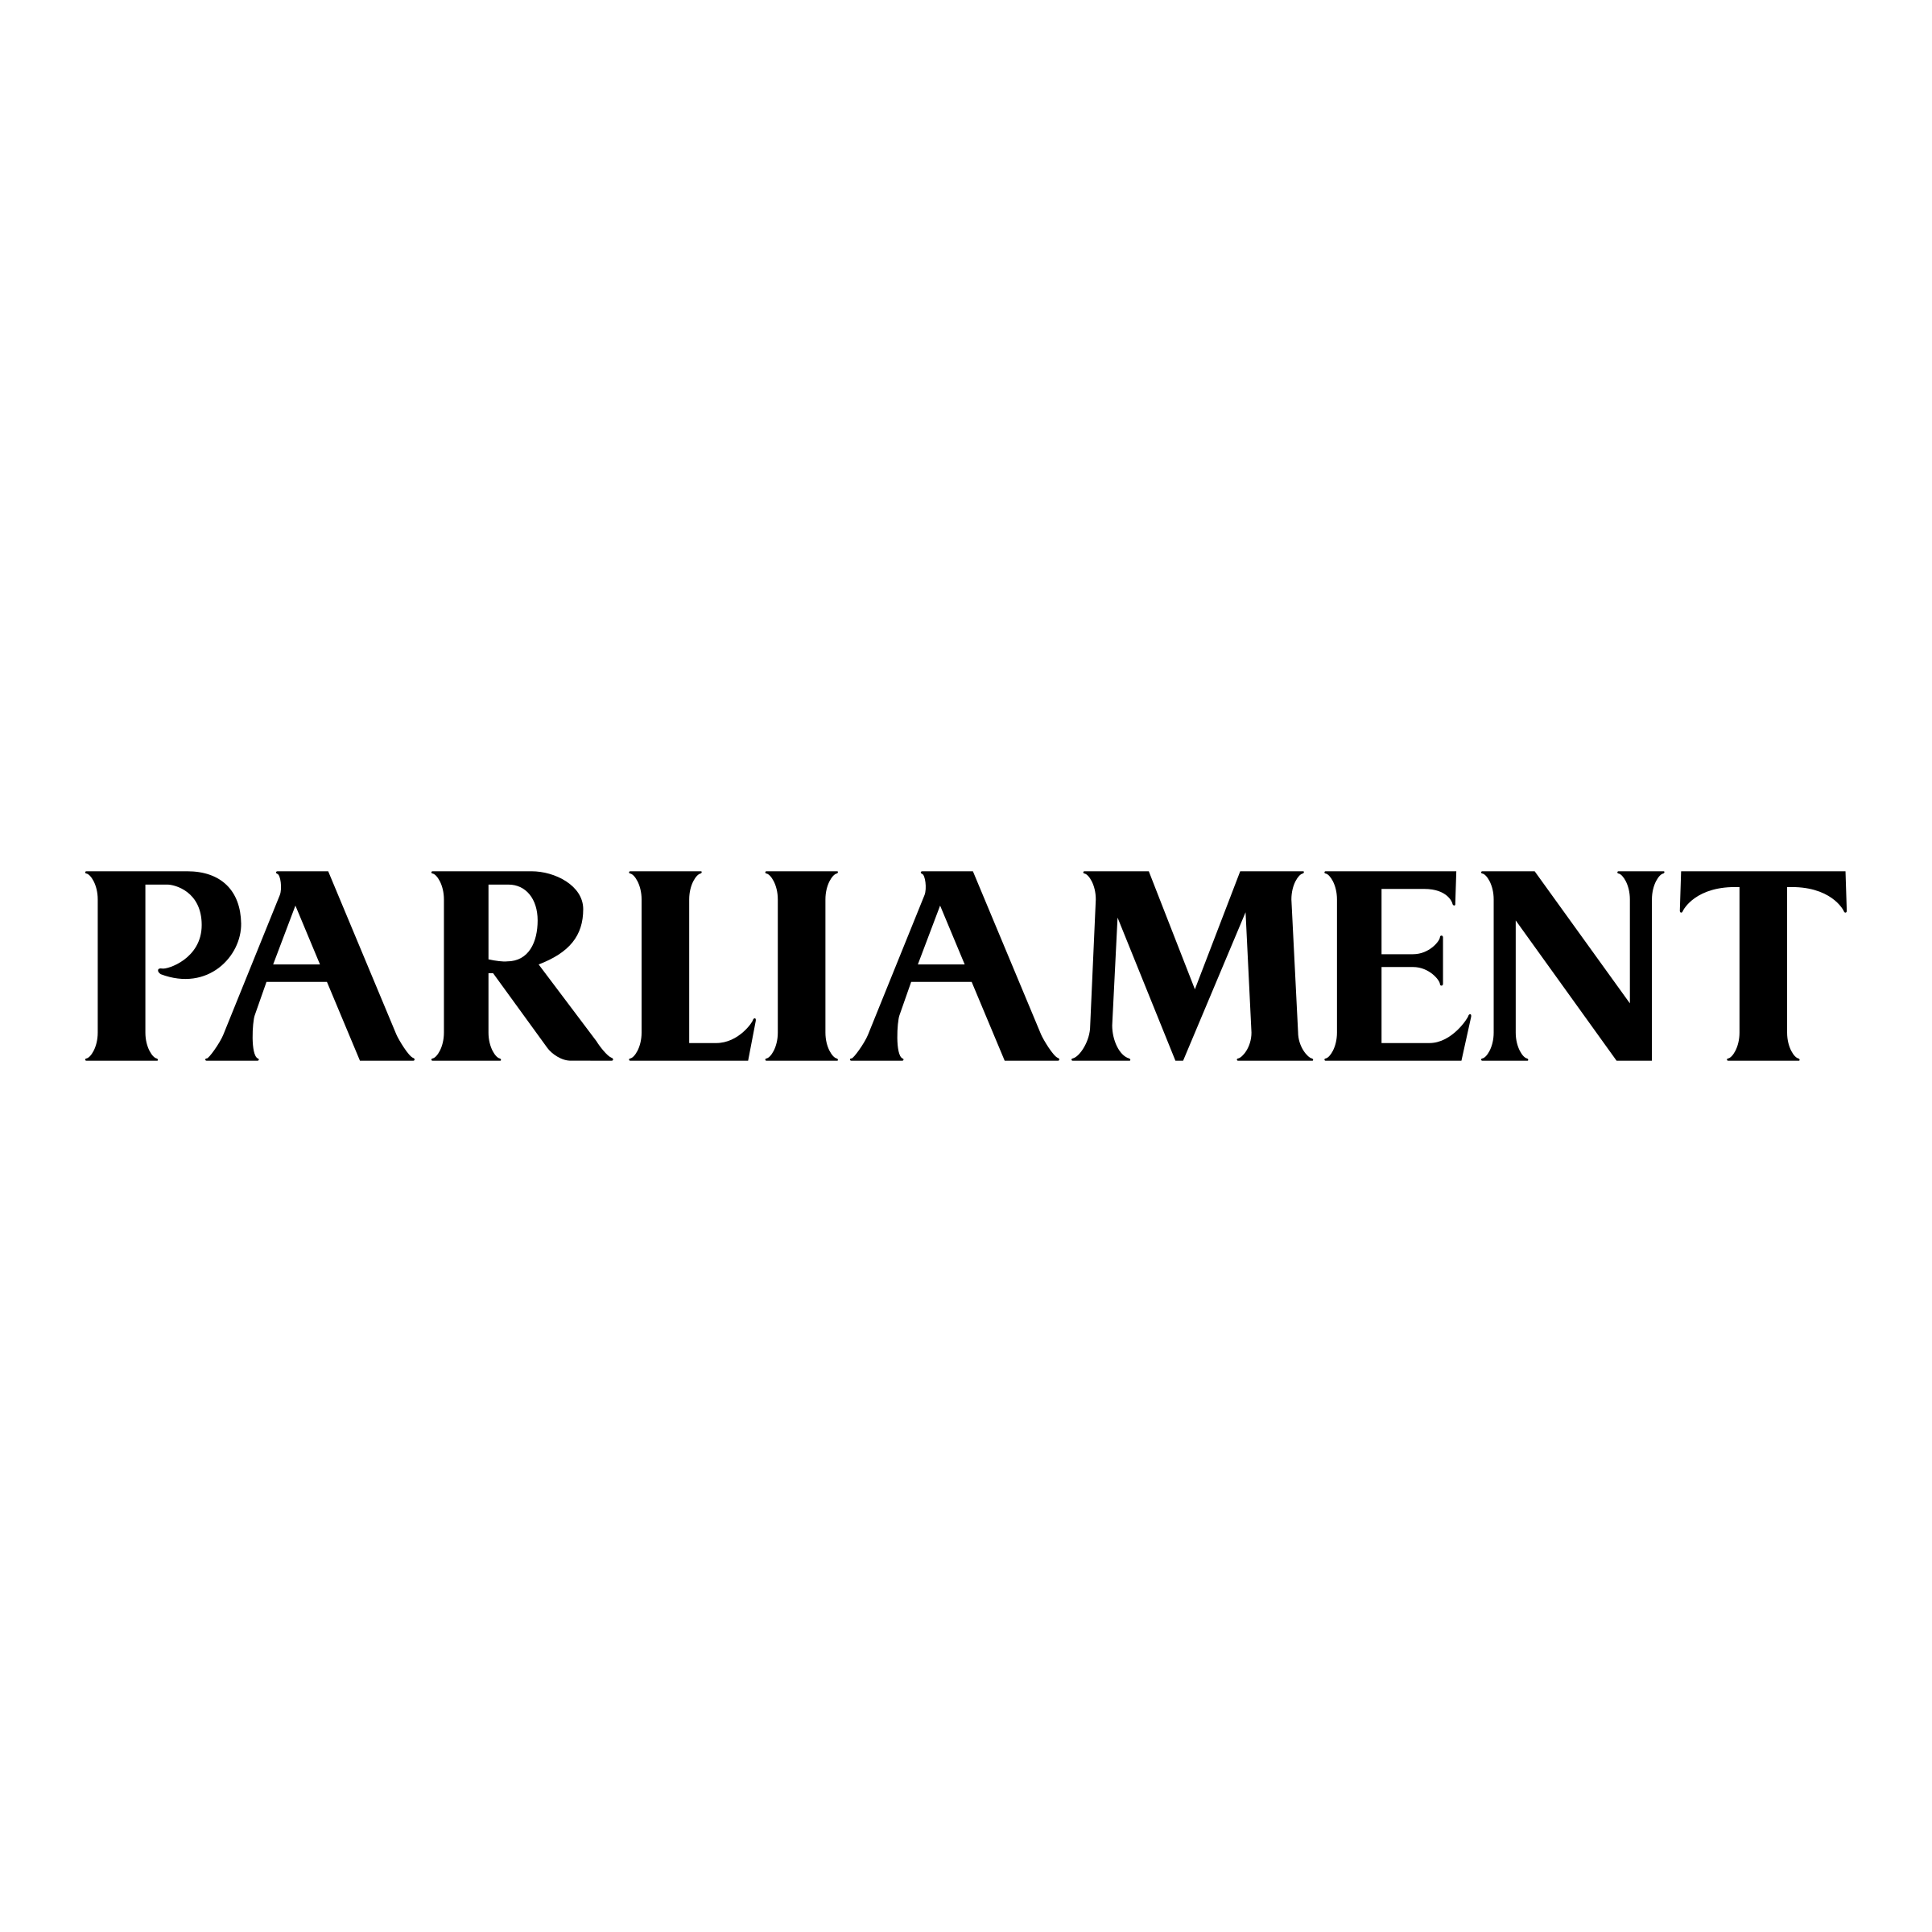 Parliament Logo - Parliament Logo PNG Transparent & SVG Vector - Freebie Supply